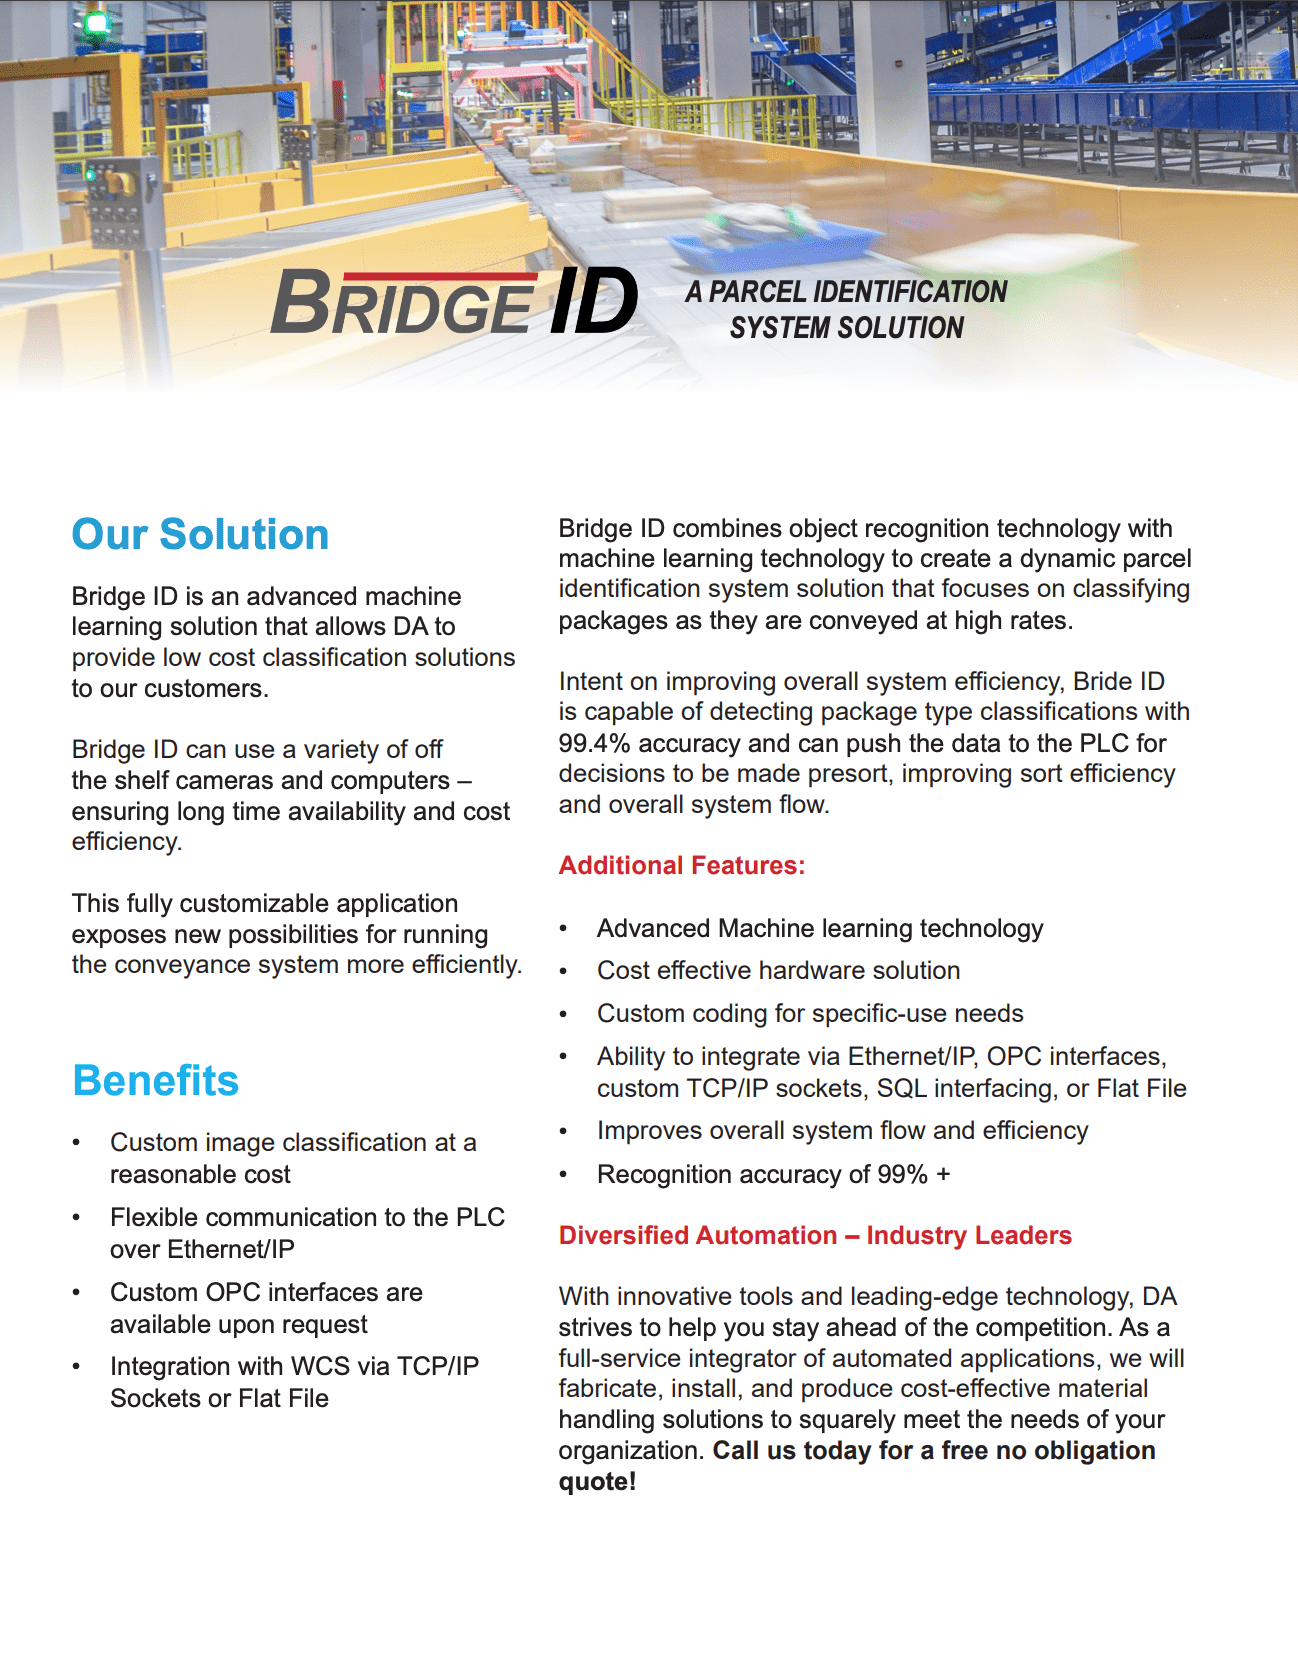 DA BridgeID - A Parcel Identification System Solutions